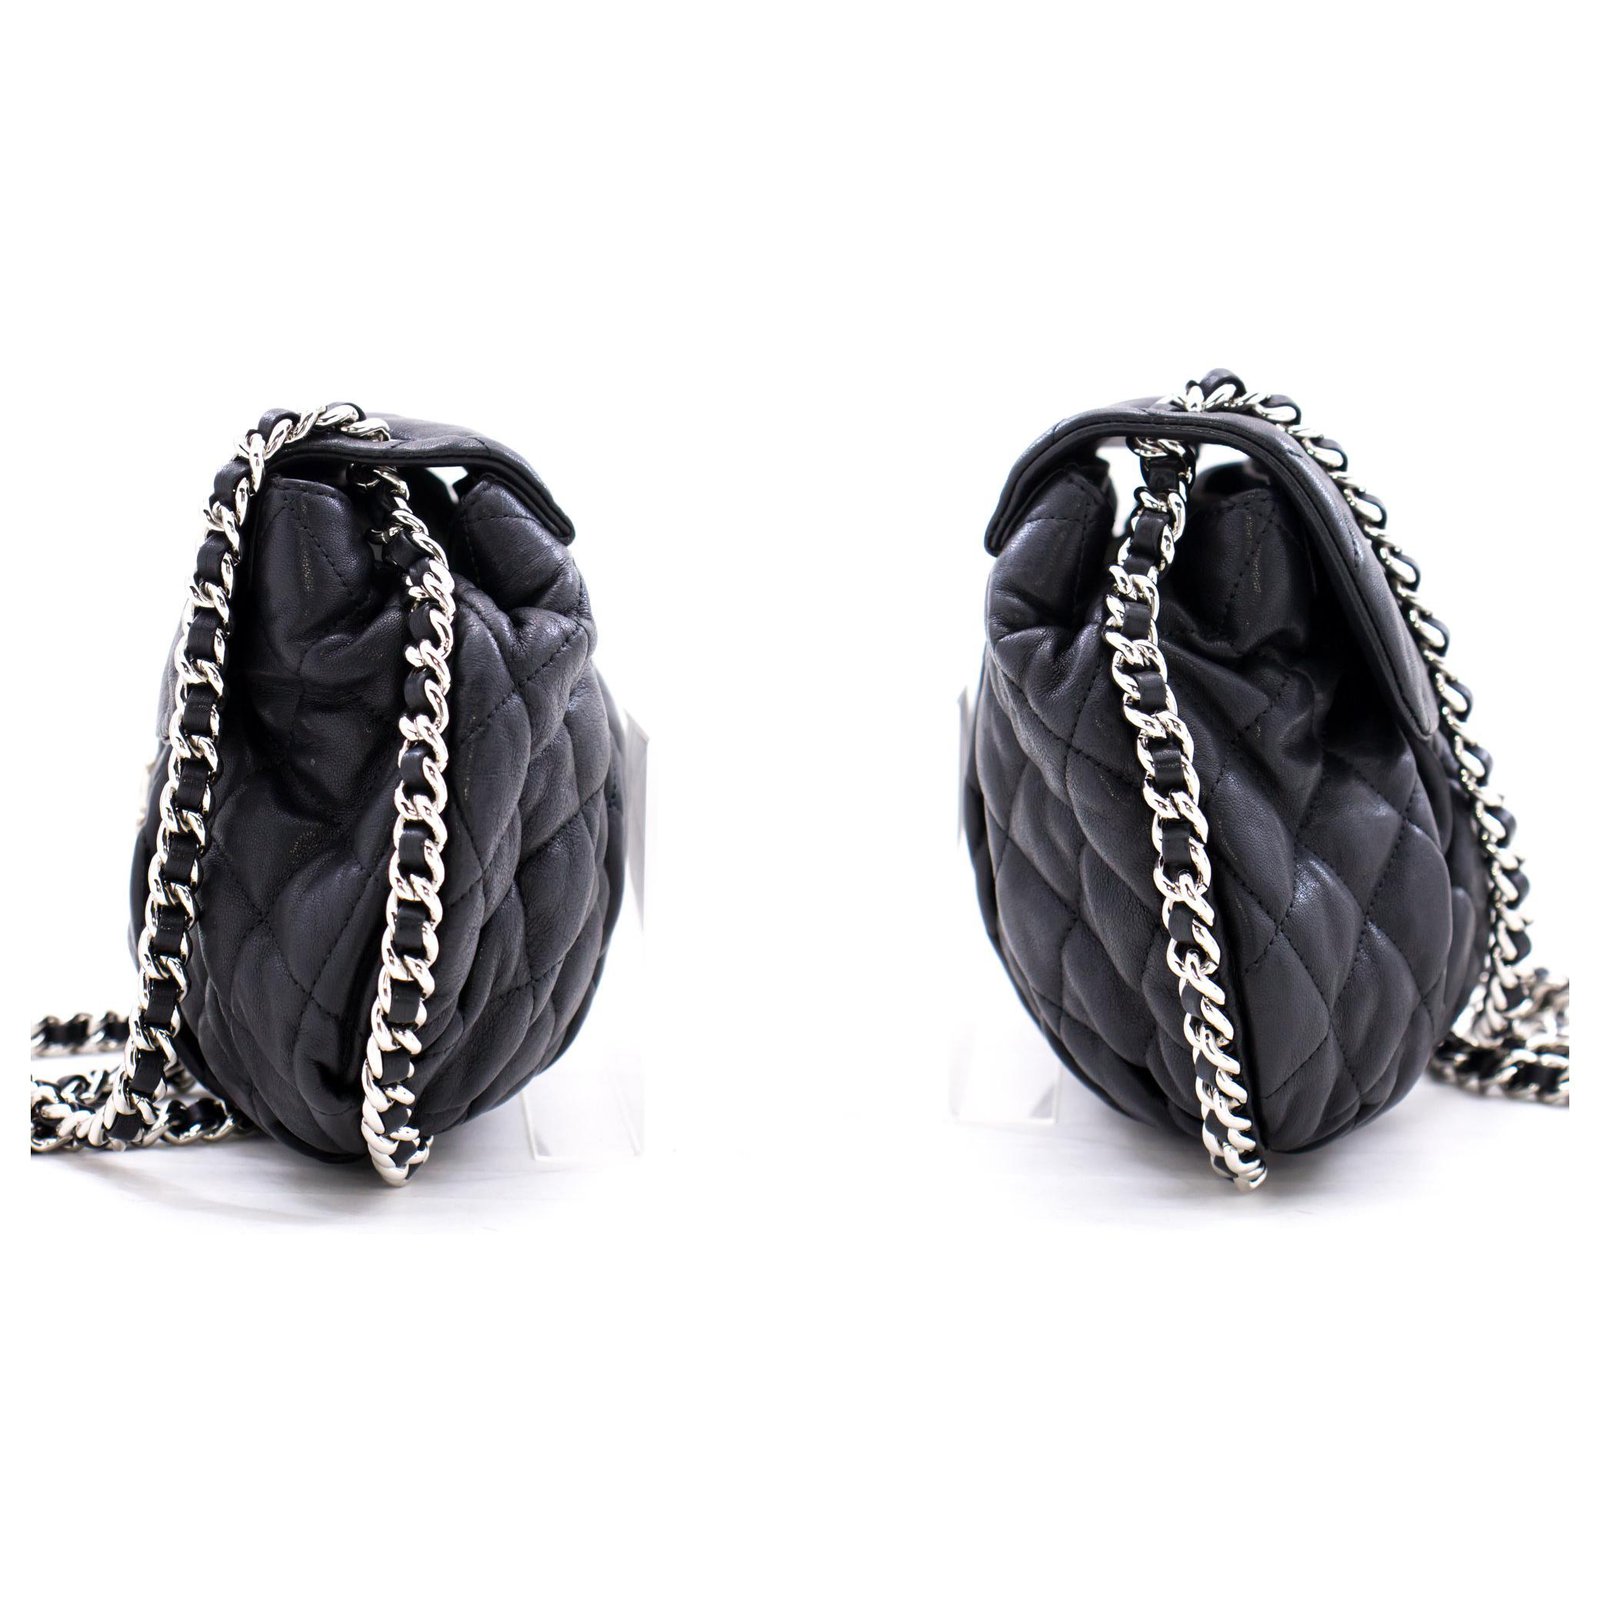 white chanel purse chain